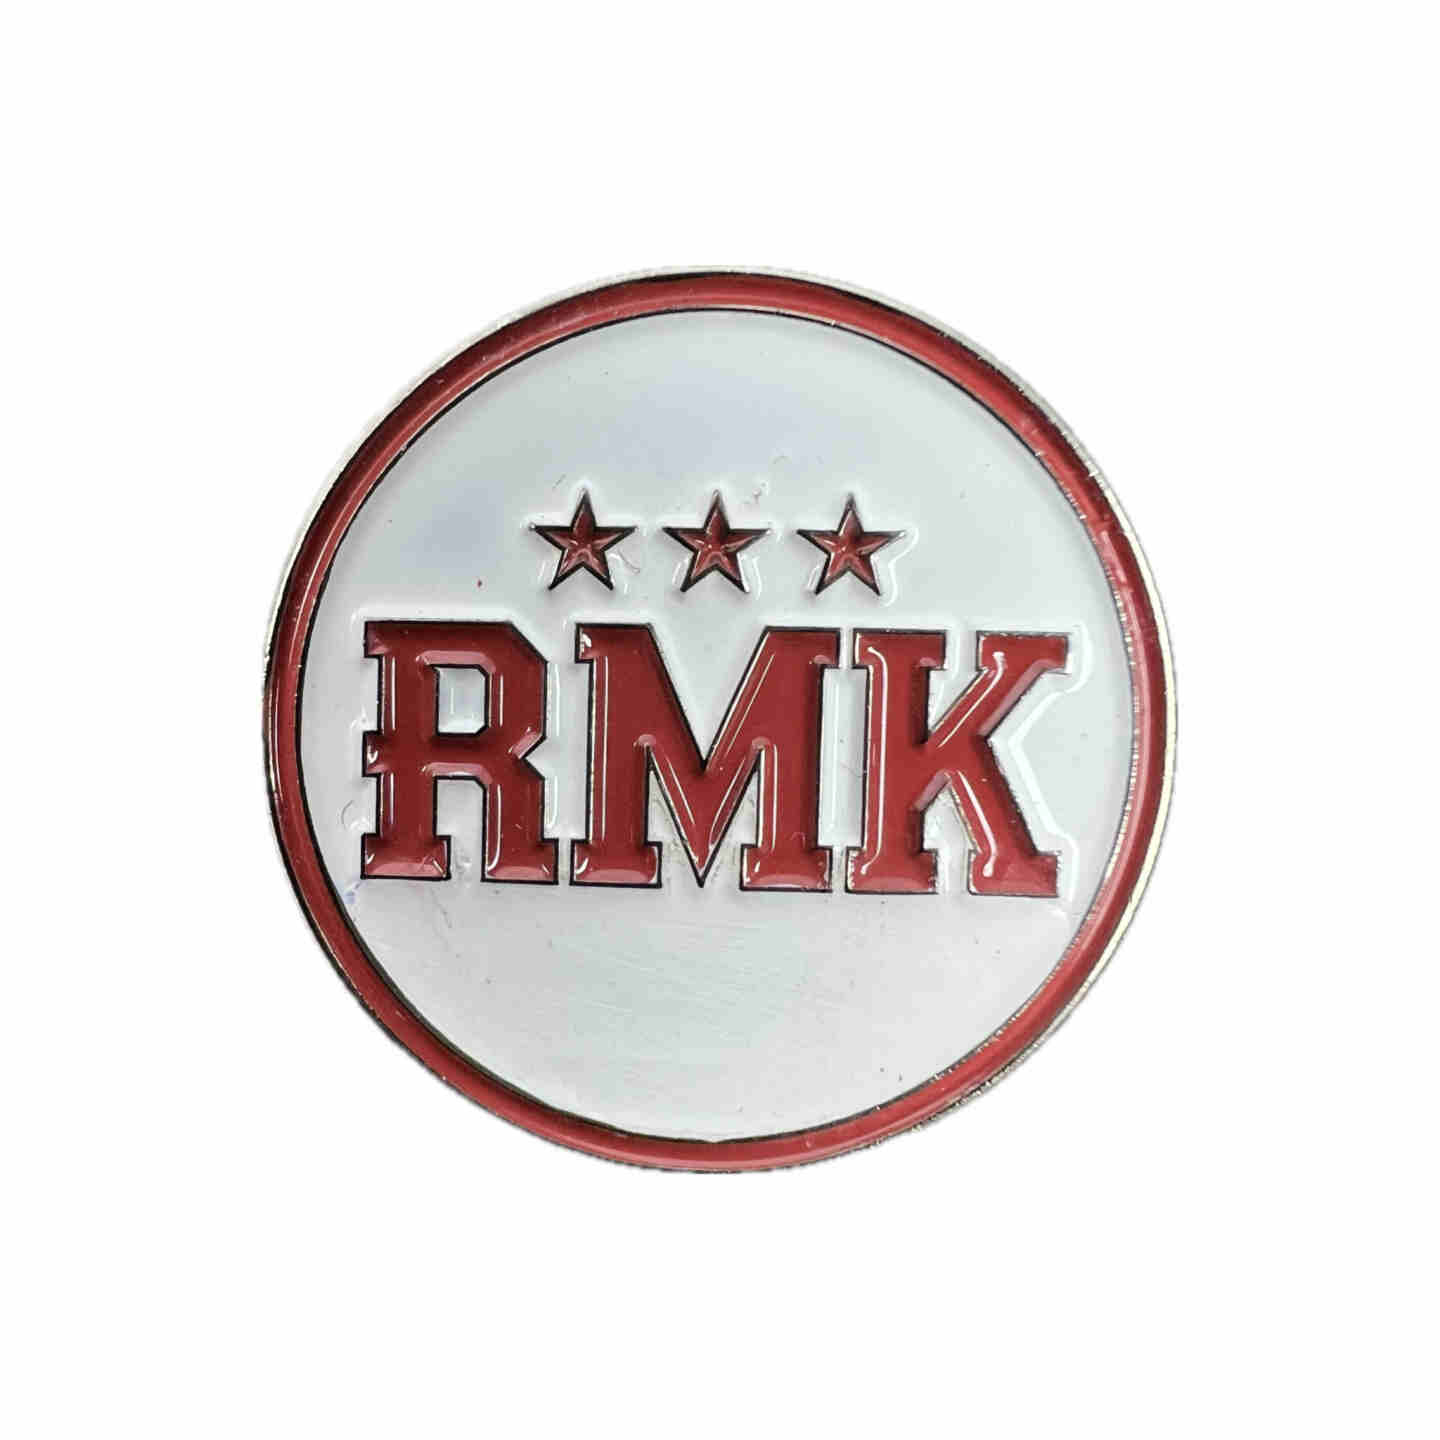 Bob Knight "RMK" Commemorative Lapel Pin Image 1